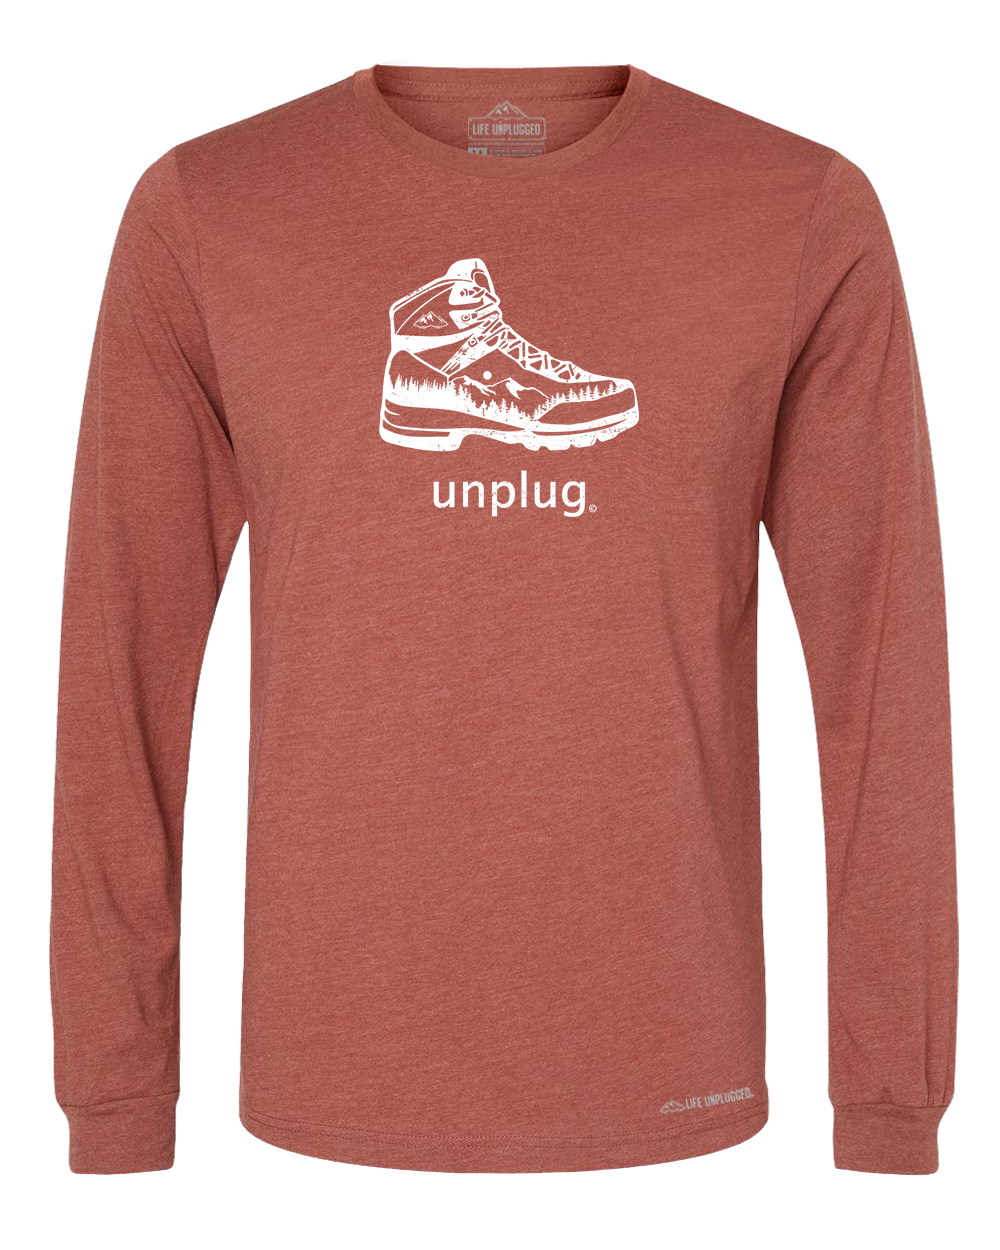 Hiking Boot Mountain Scene Premium Polyblend Long Sleeve T-Shirt